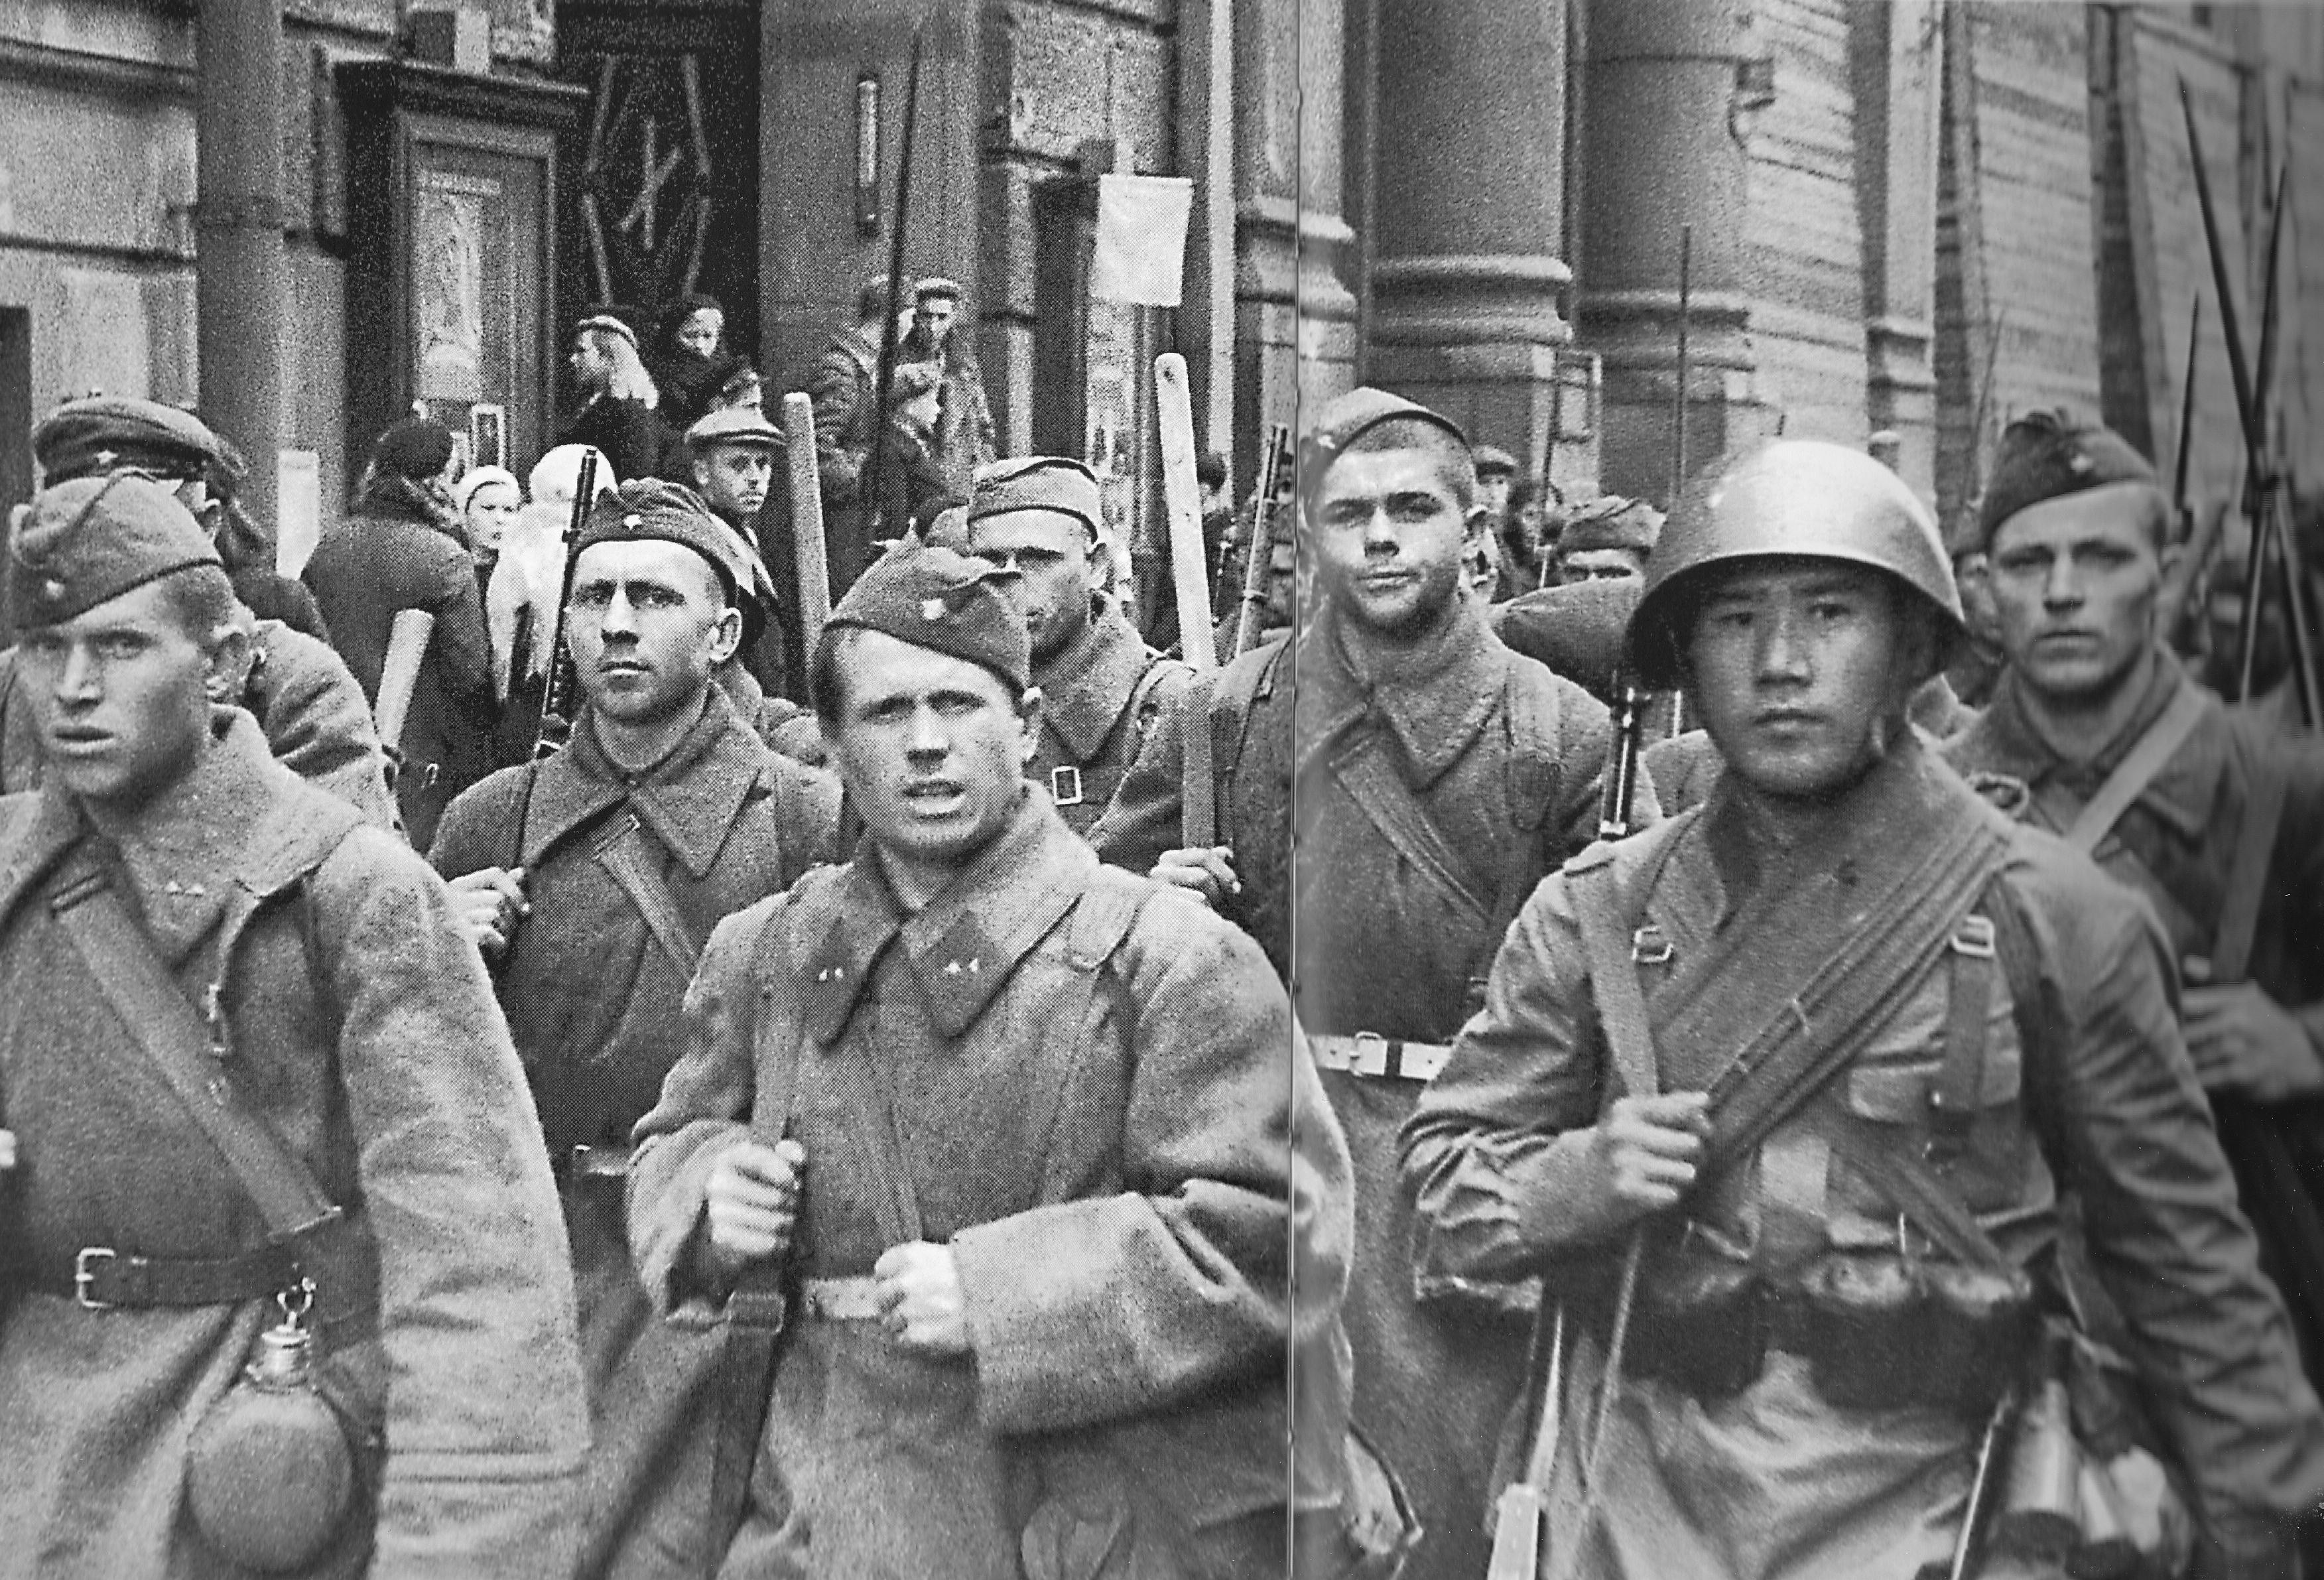 Soviet soldiers in Leningrad, Russia, 28 Sep 1941